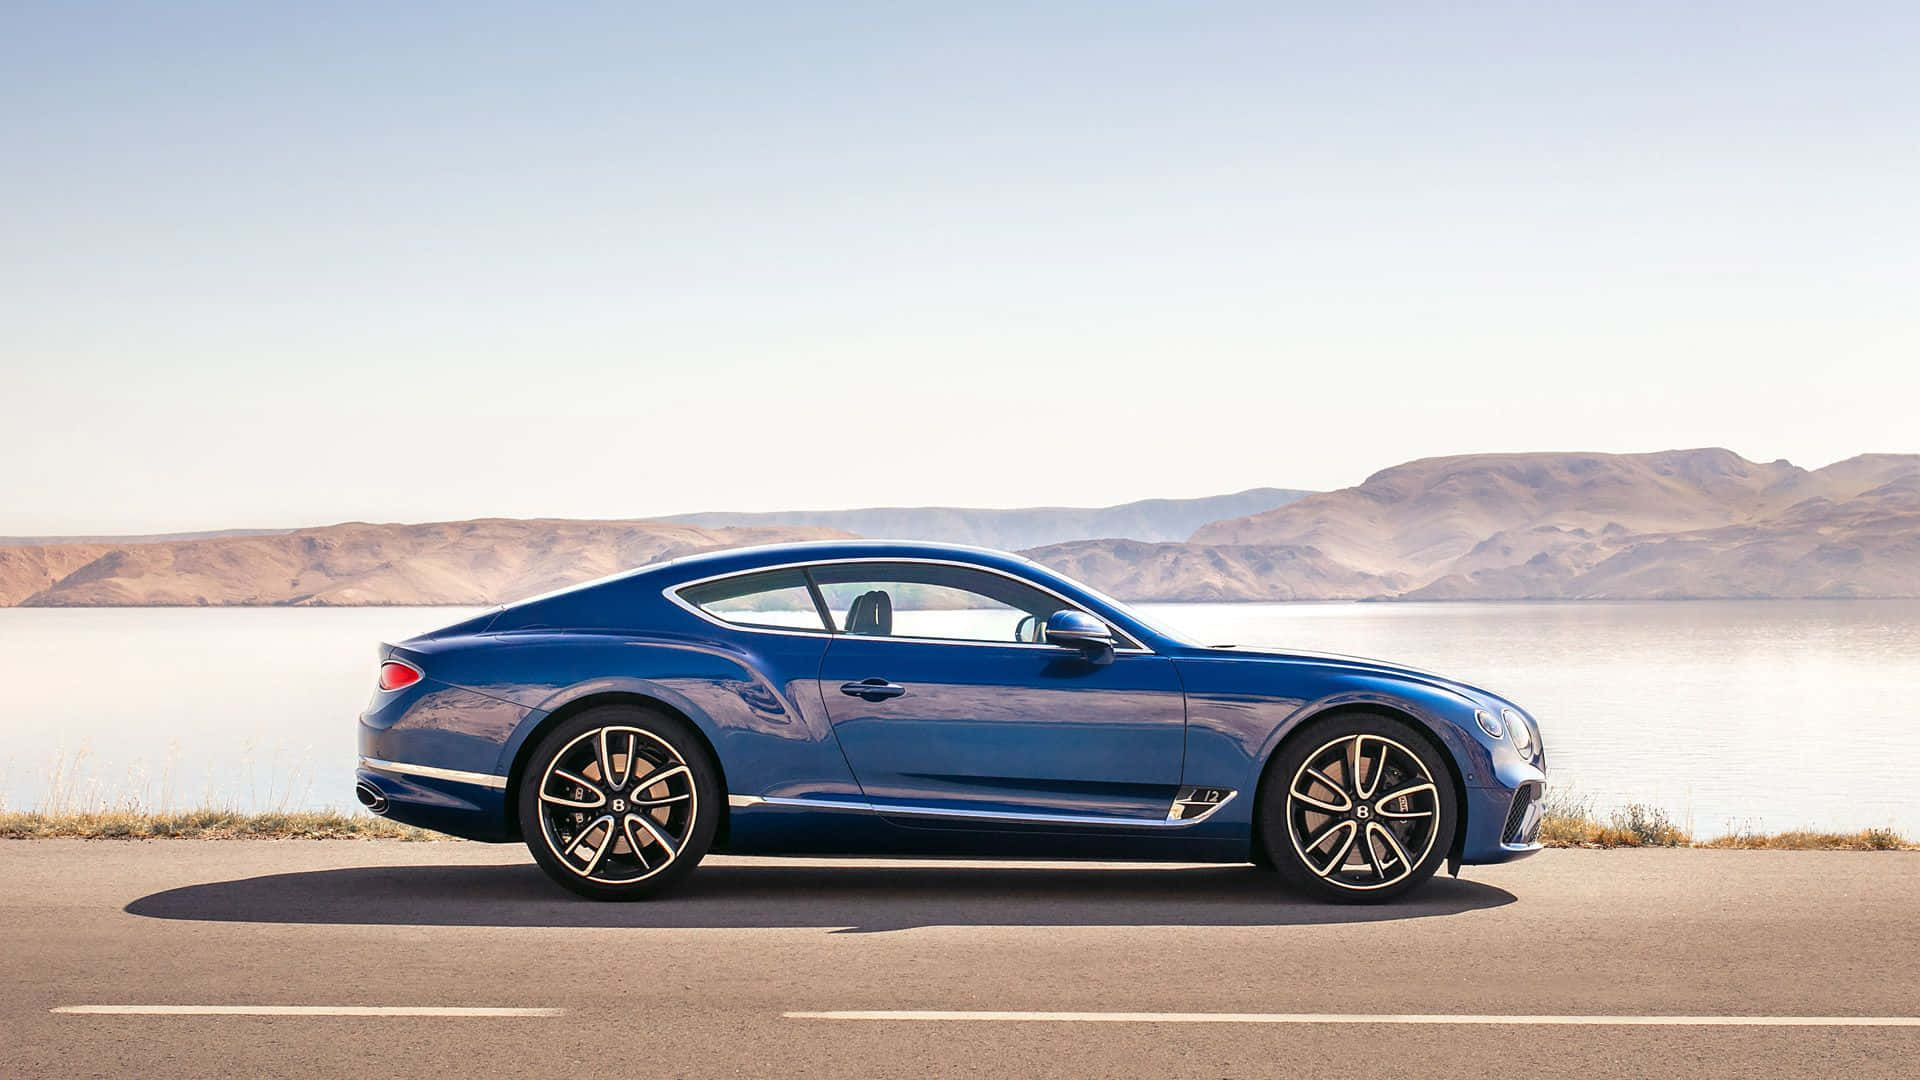 Germantranslation: Der Ultimative Luxus: Bentley